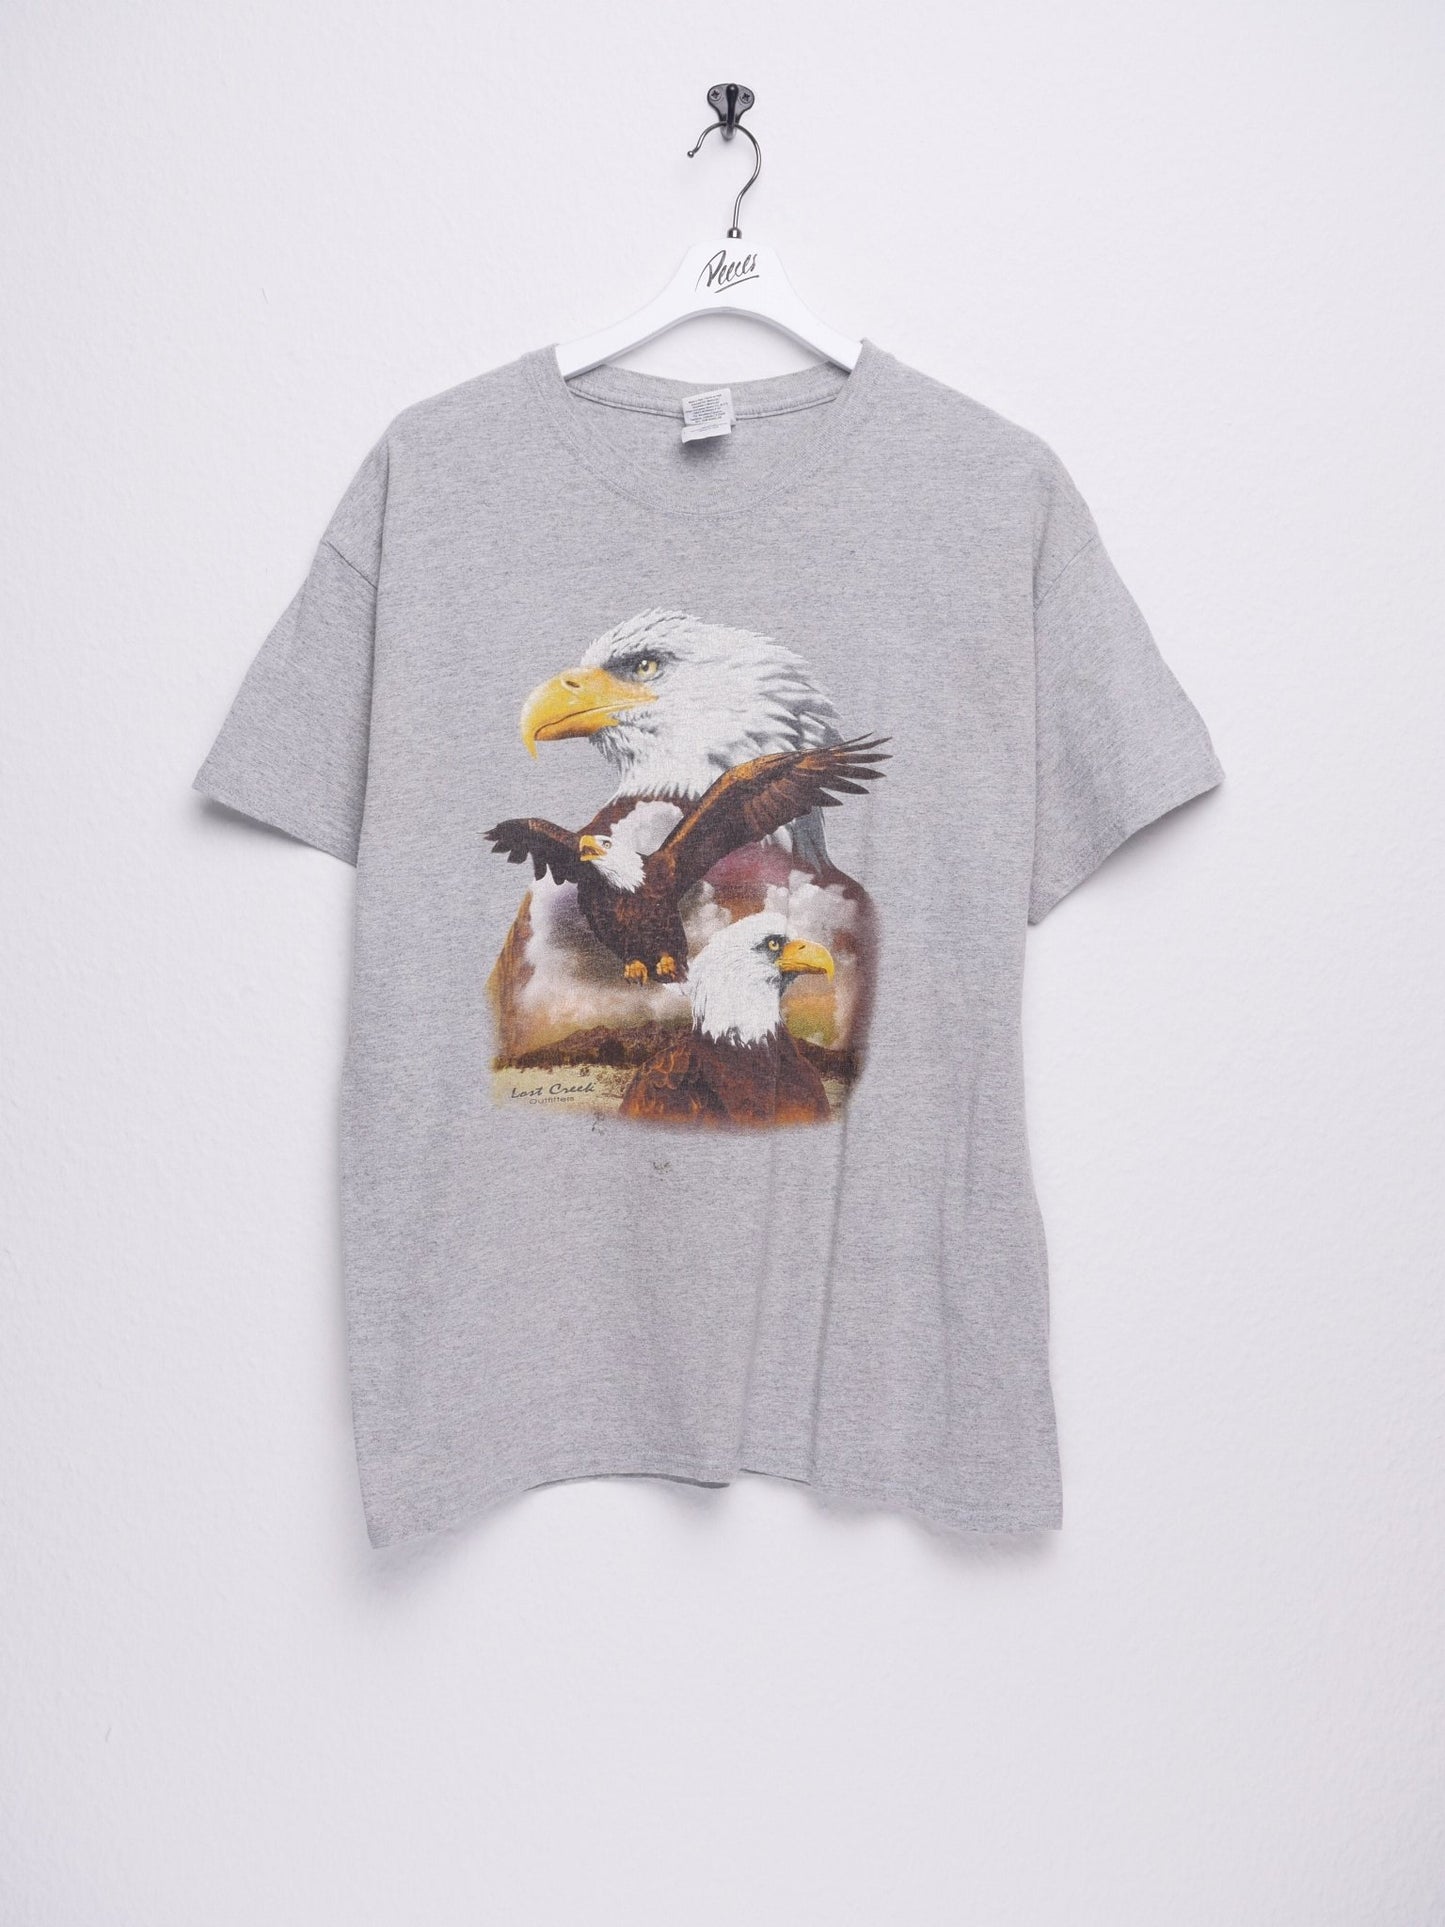 Eagles printed Graphic grey Shirt - Peeces